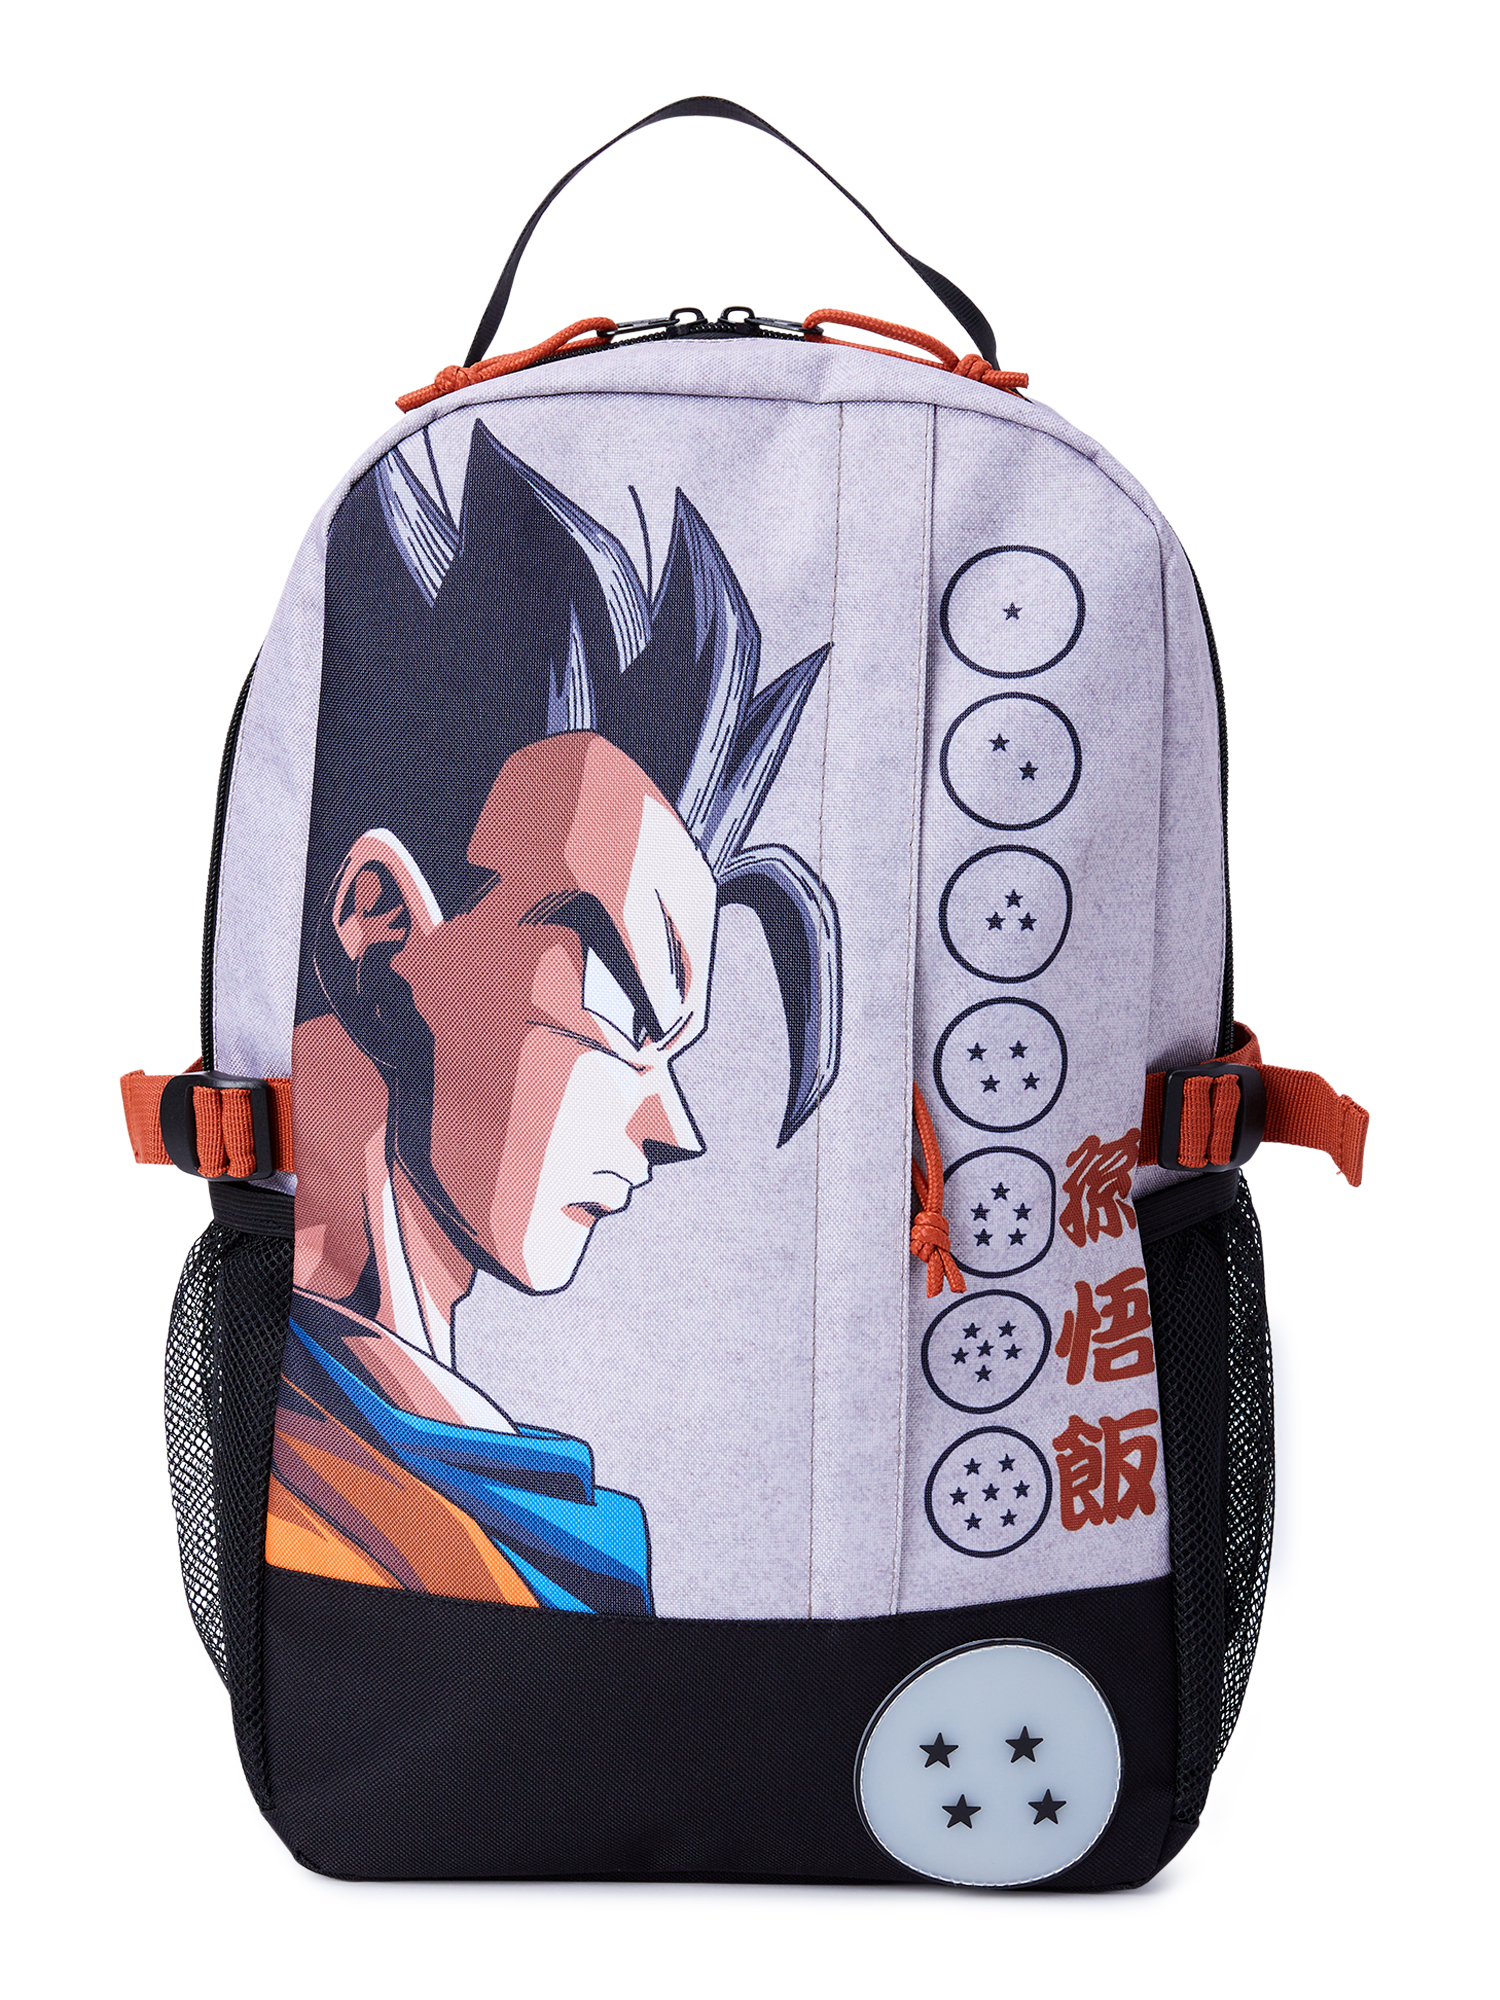 Dragon Ball Z Gohan Unisex 18" Laptop Backpack, Grey Black - image 1 of 5